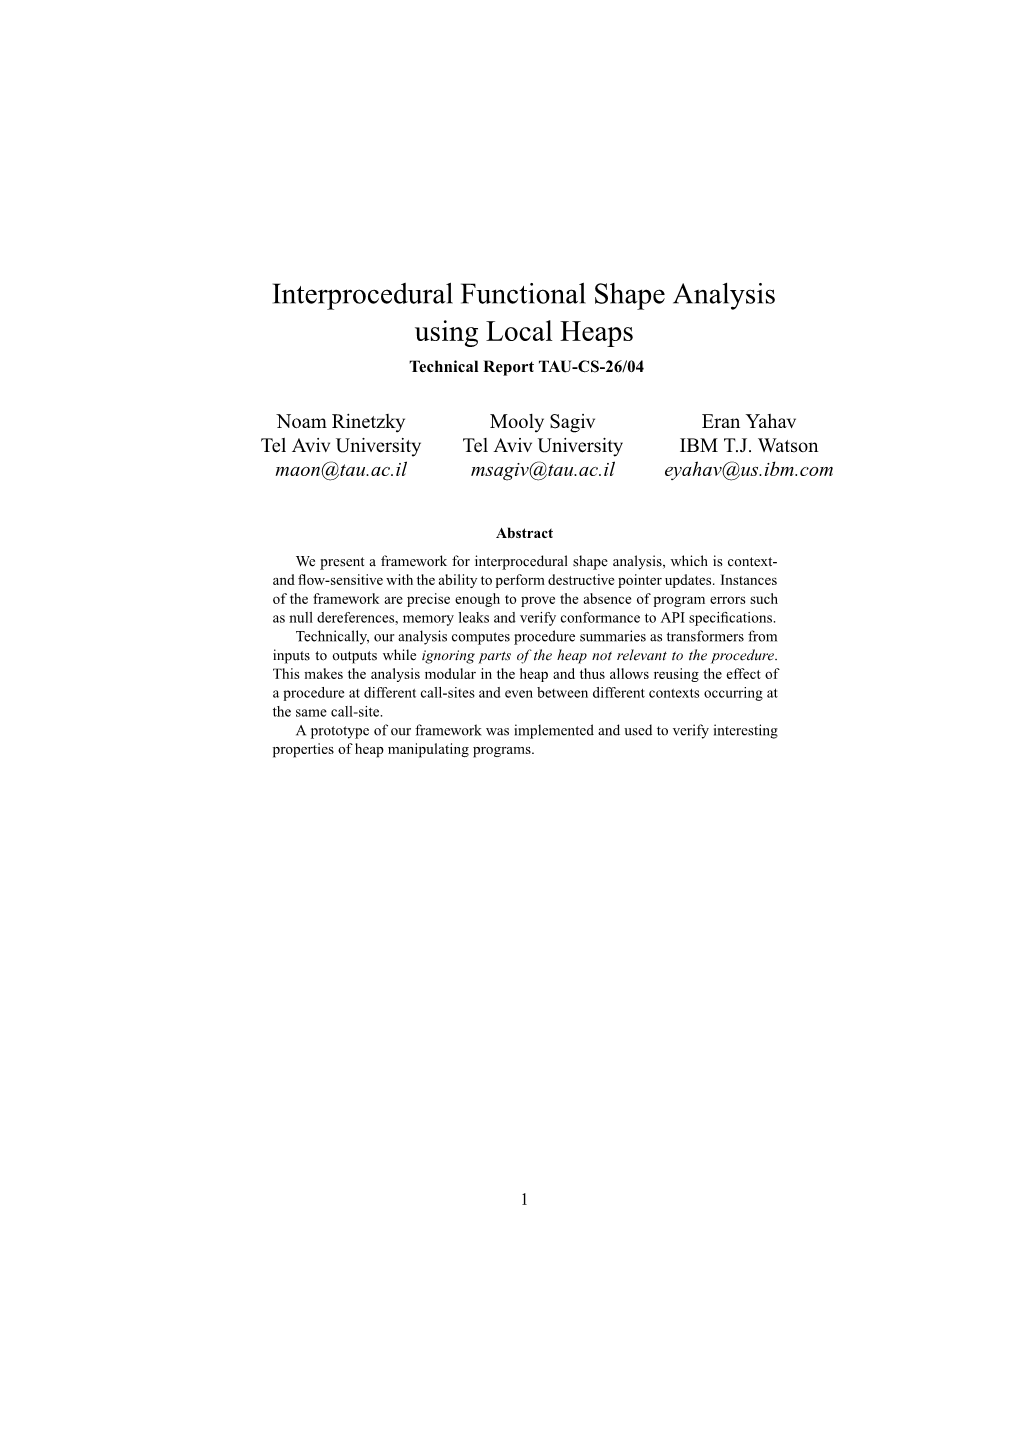 Interprocedural Functional Shape Analysis Using Local Heaps Technical Report TAU-CS-26/04